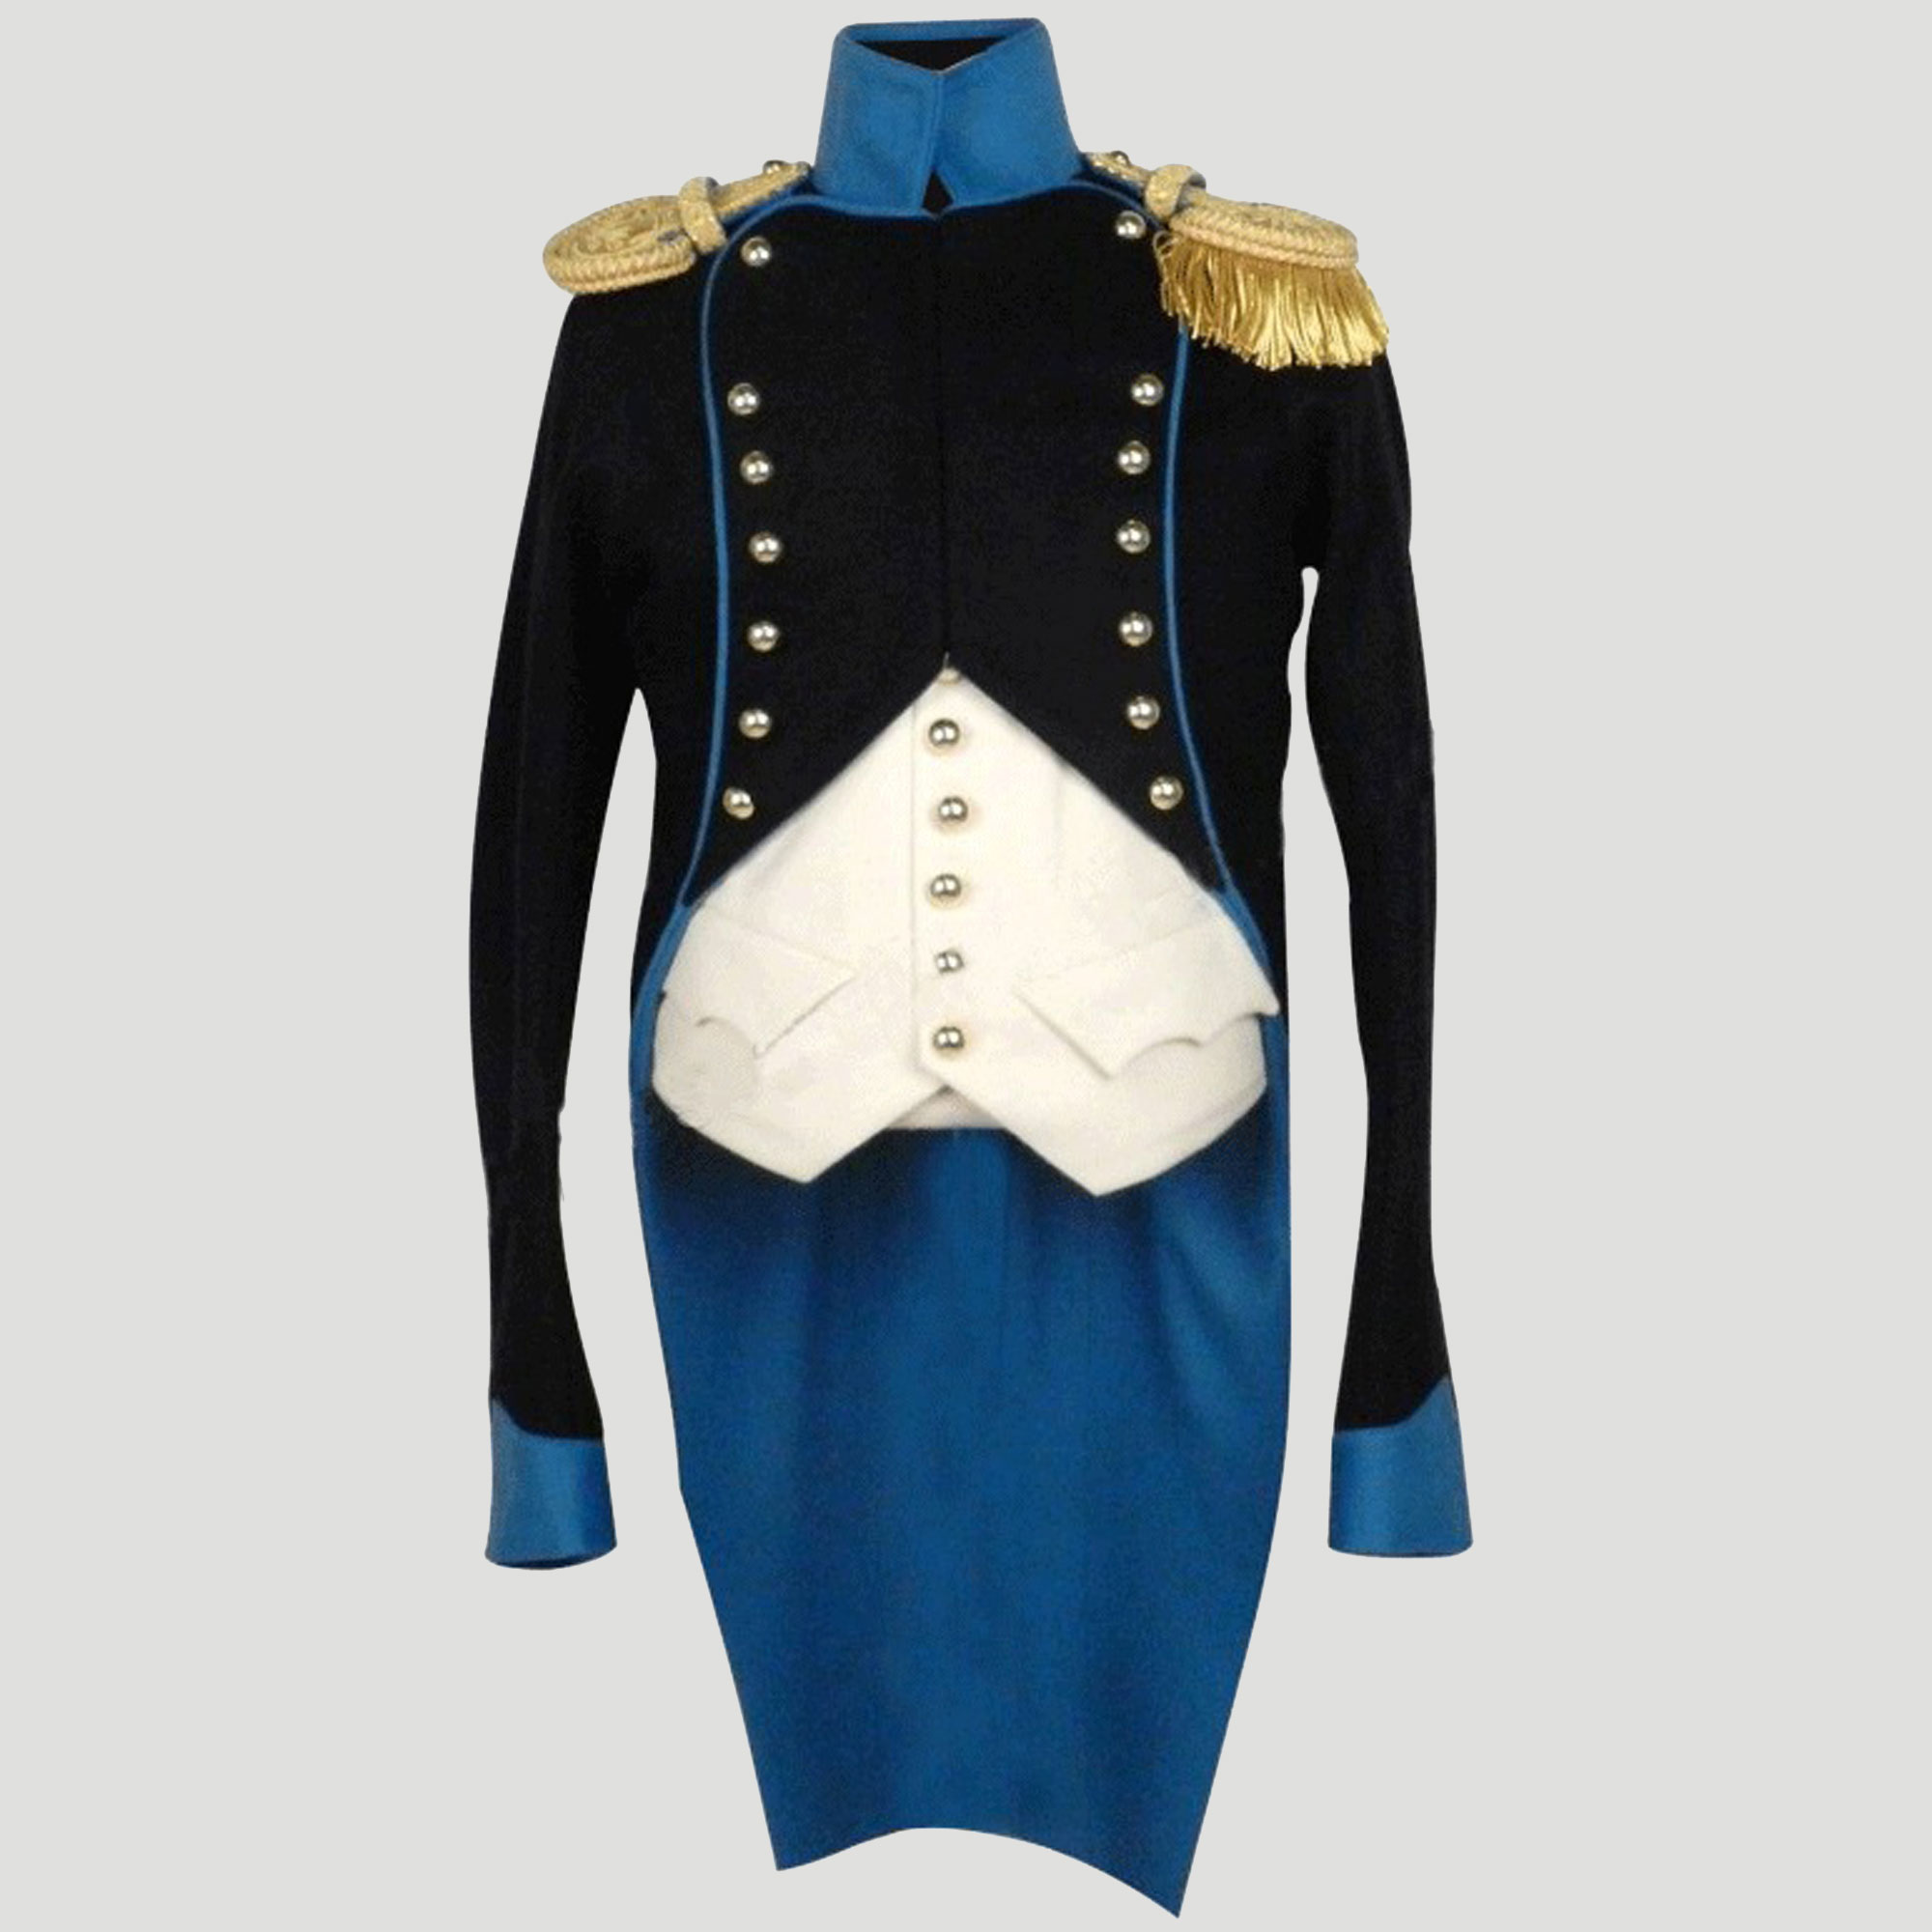 New Navy Blue British Napoleon Uniform Civilian Men's Jacket - 463